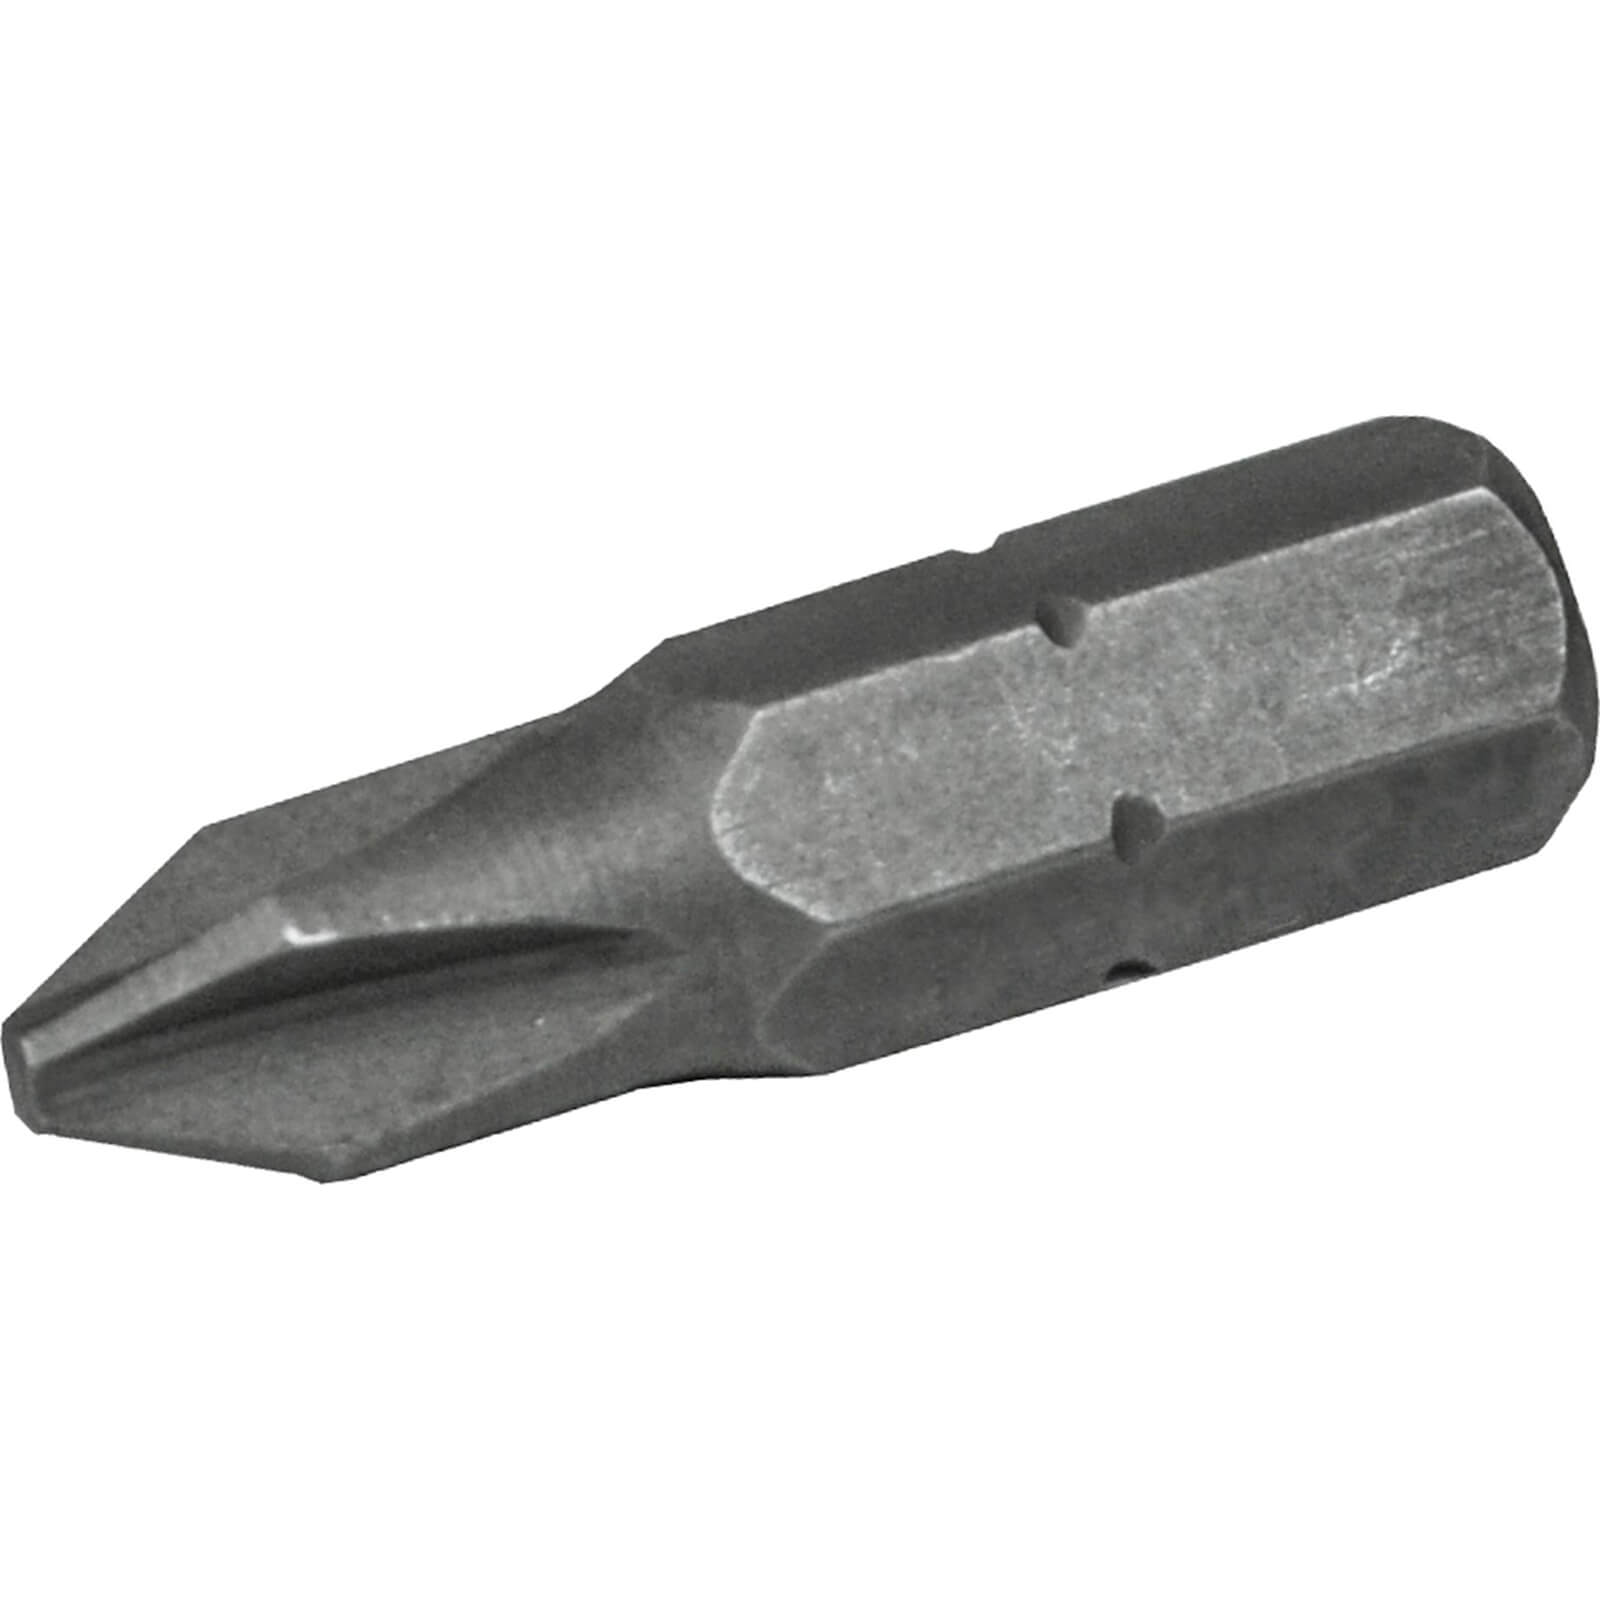 Image of Faithfull Phillips S2 Grade Steel Screwdriver Bits PH2 25mm Pack of 3